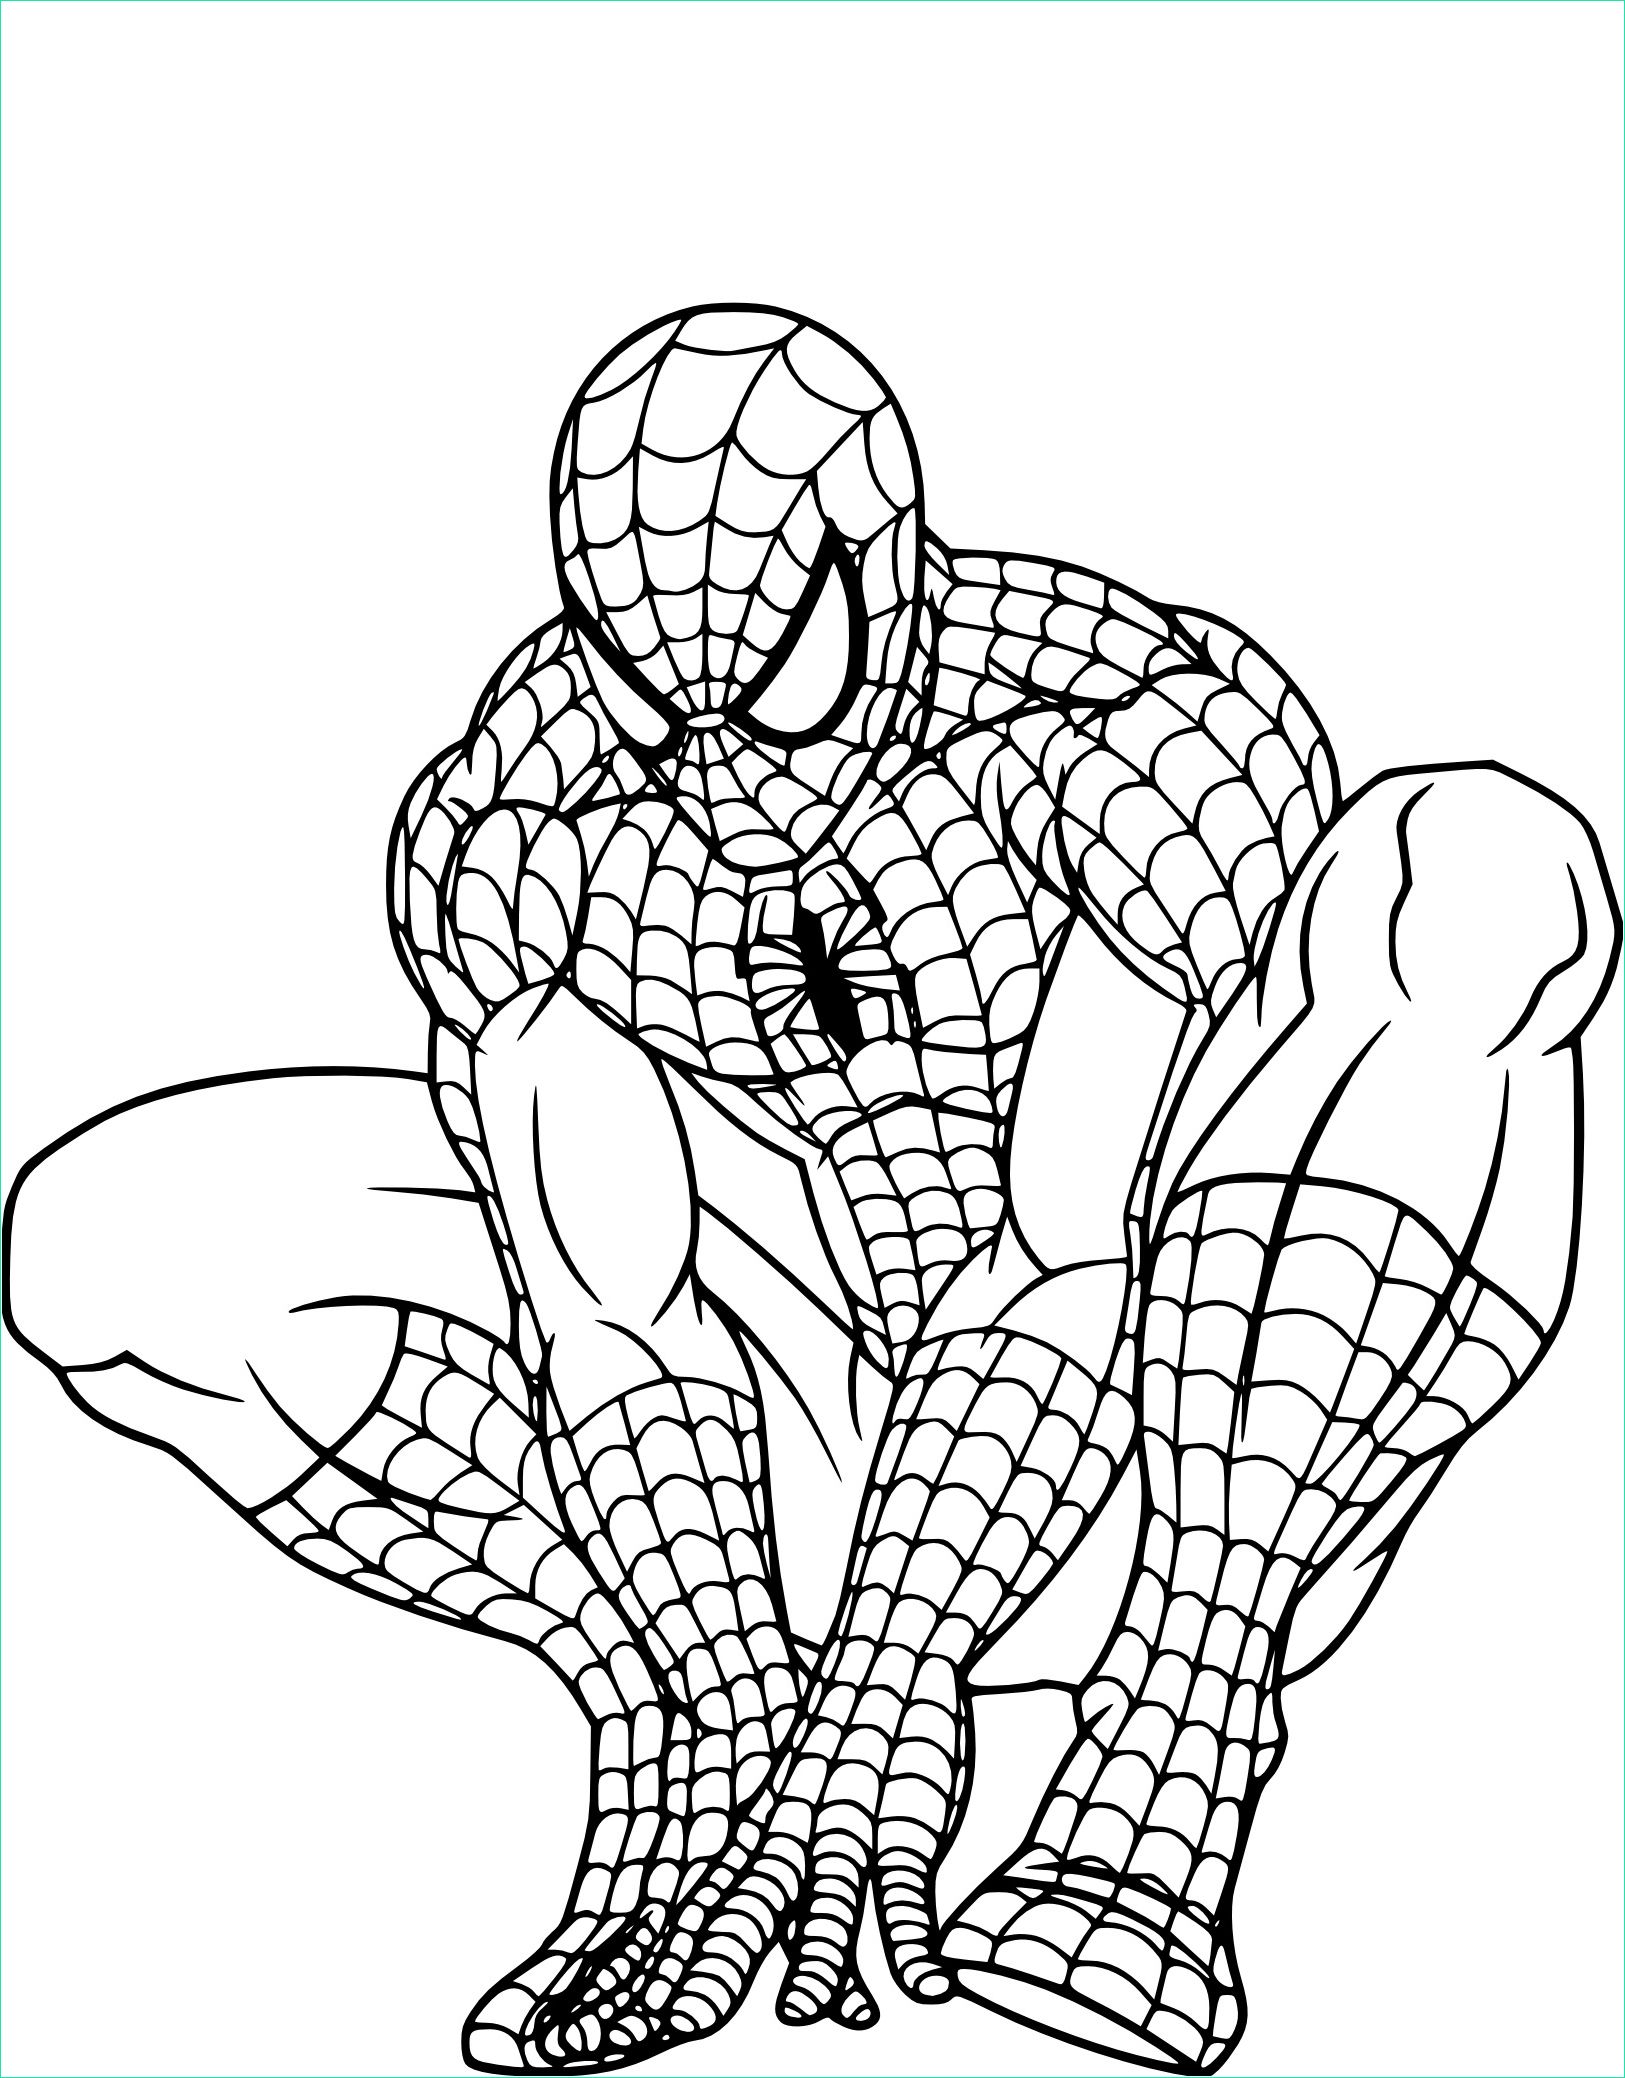 15 classique coloriage spider man image